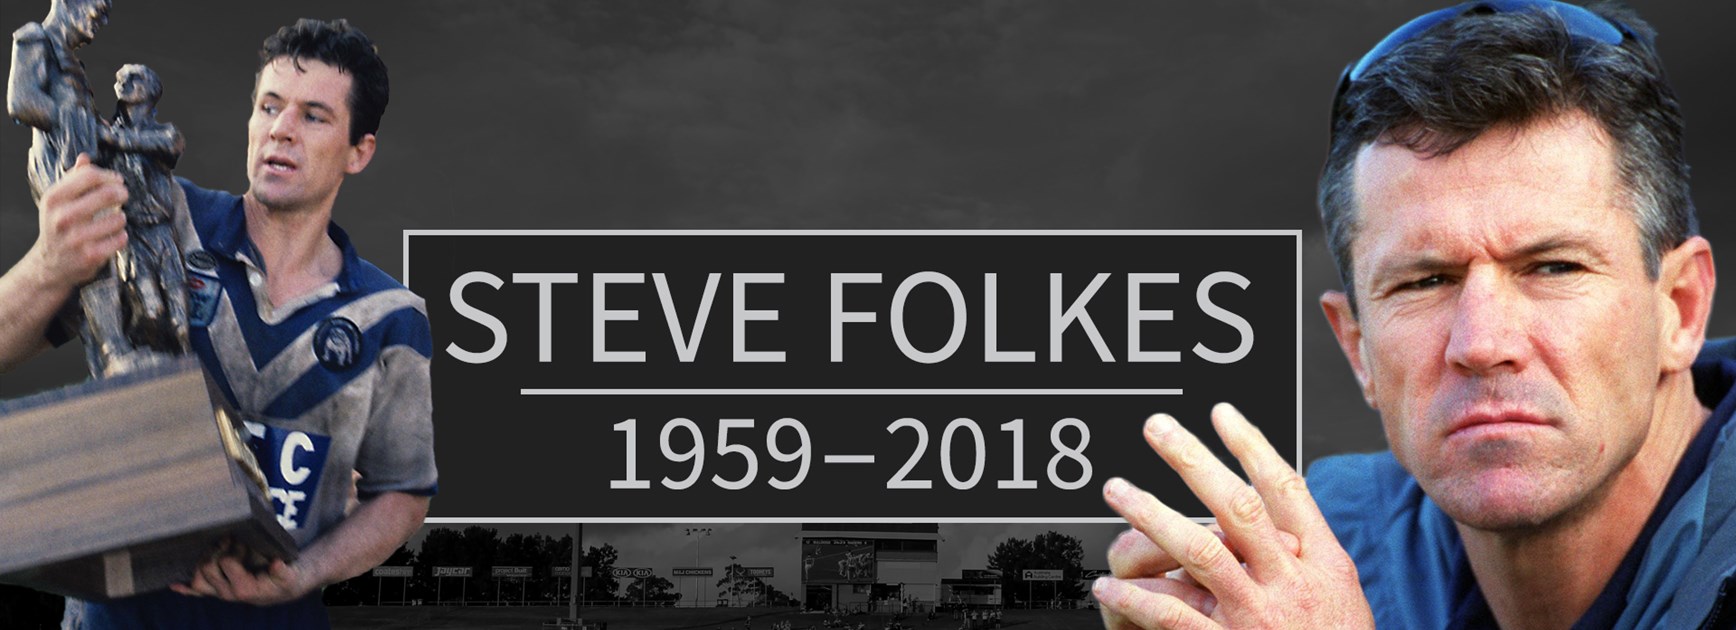 Steve Folkes dies, aged 59: Bulldogs mourn club legend